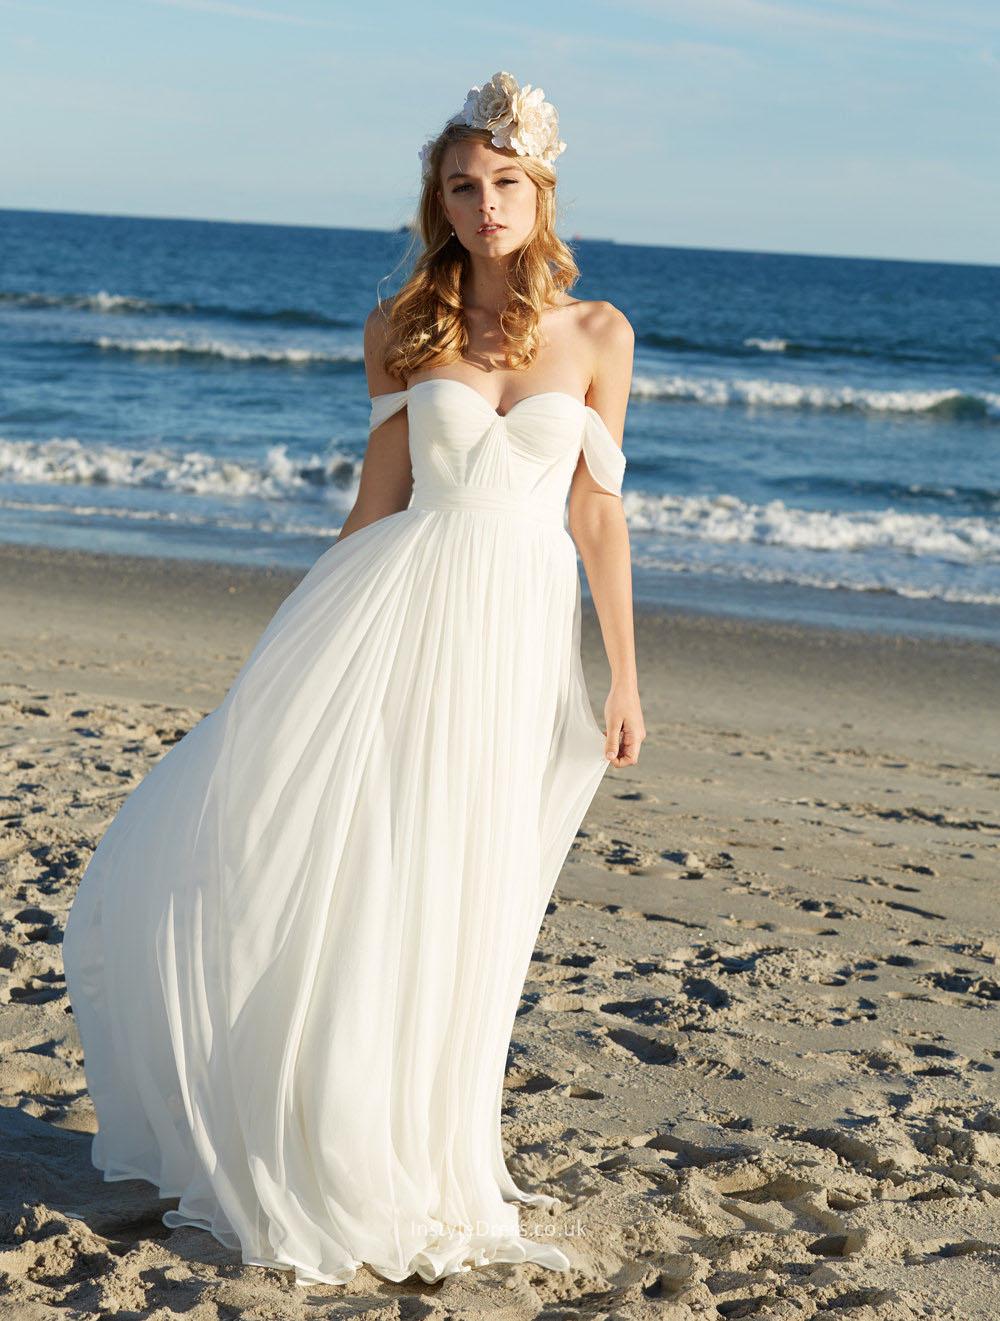 Dreamy beach wedding and dresses